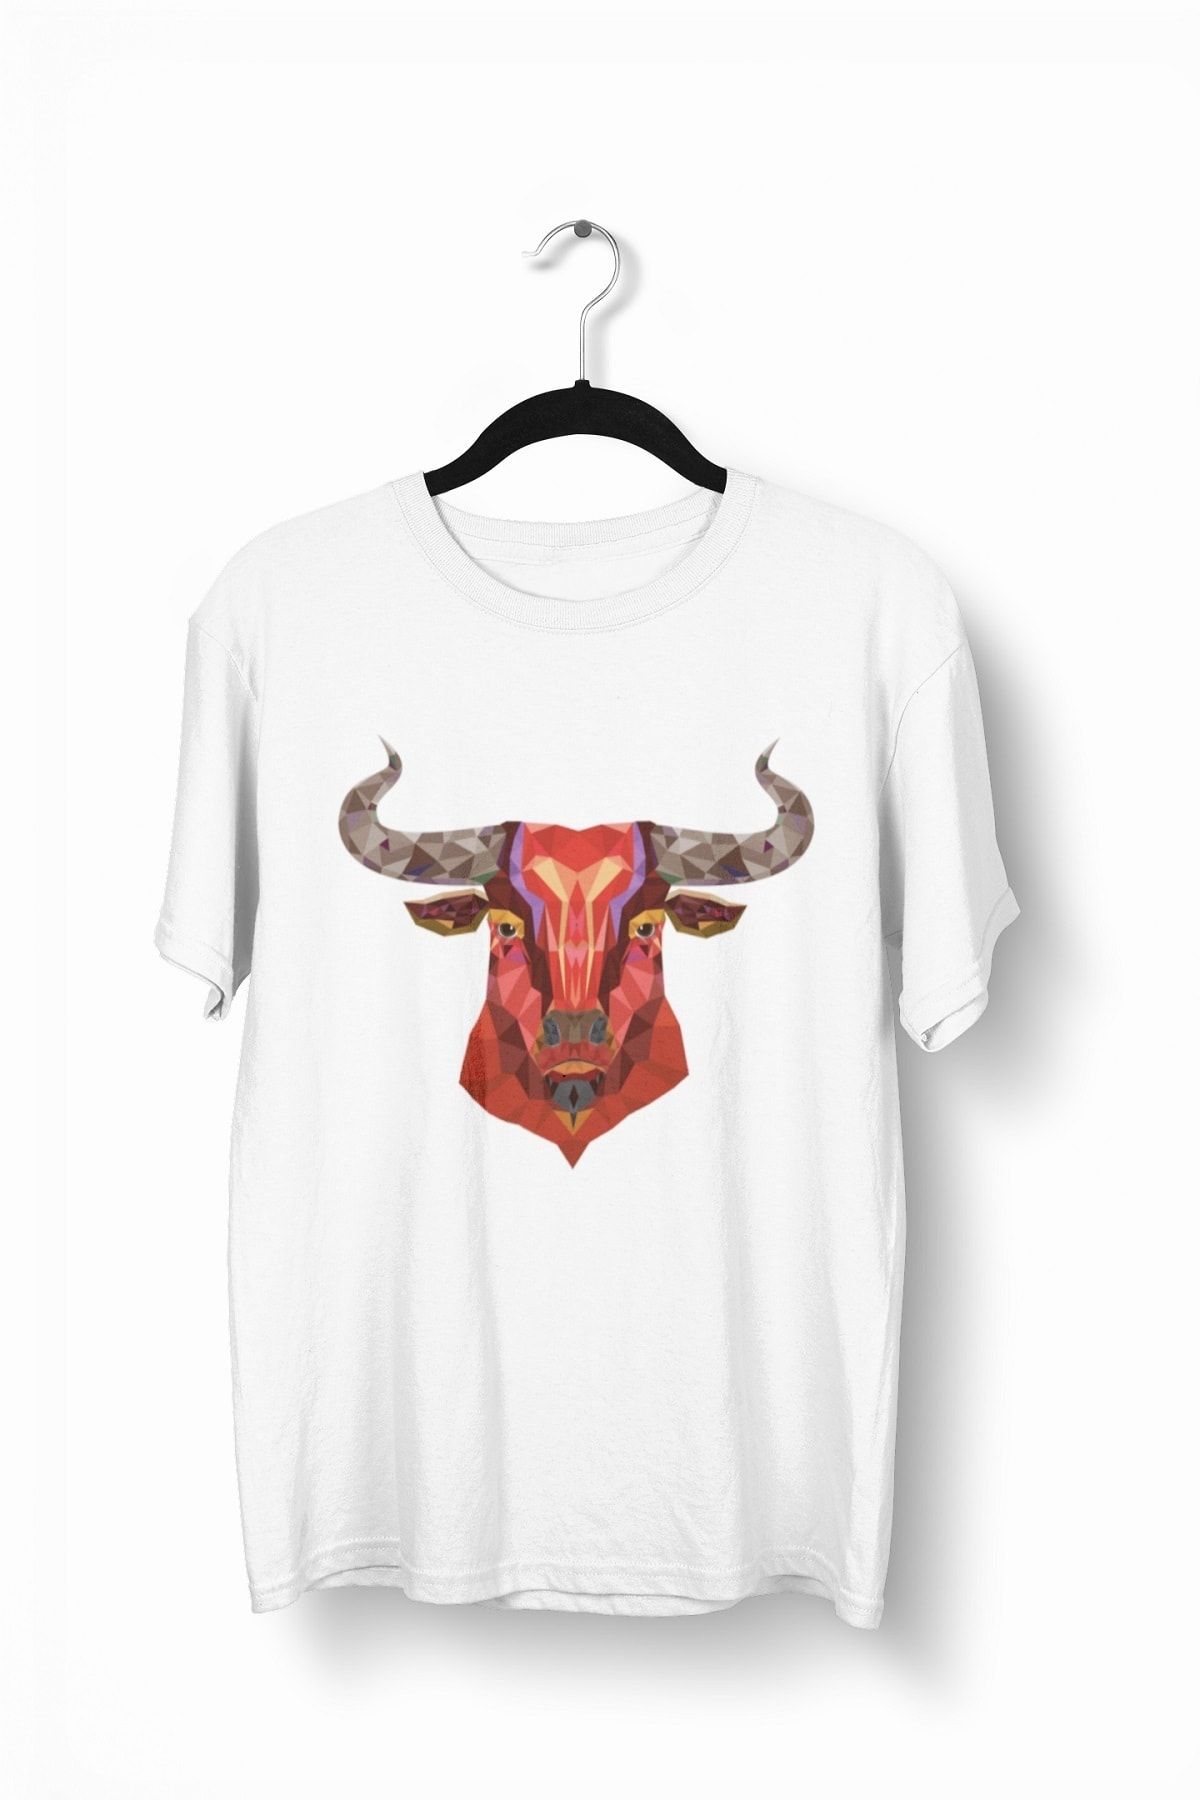 Tshigo Unisex Horny Bull Baskılı Erkek T-shirt - 2019ts209